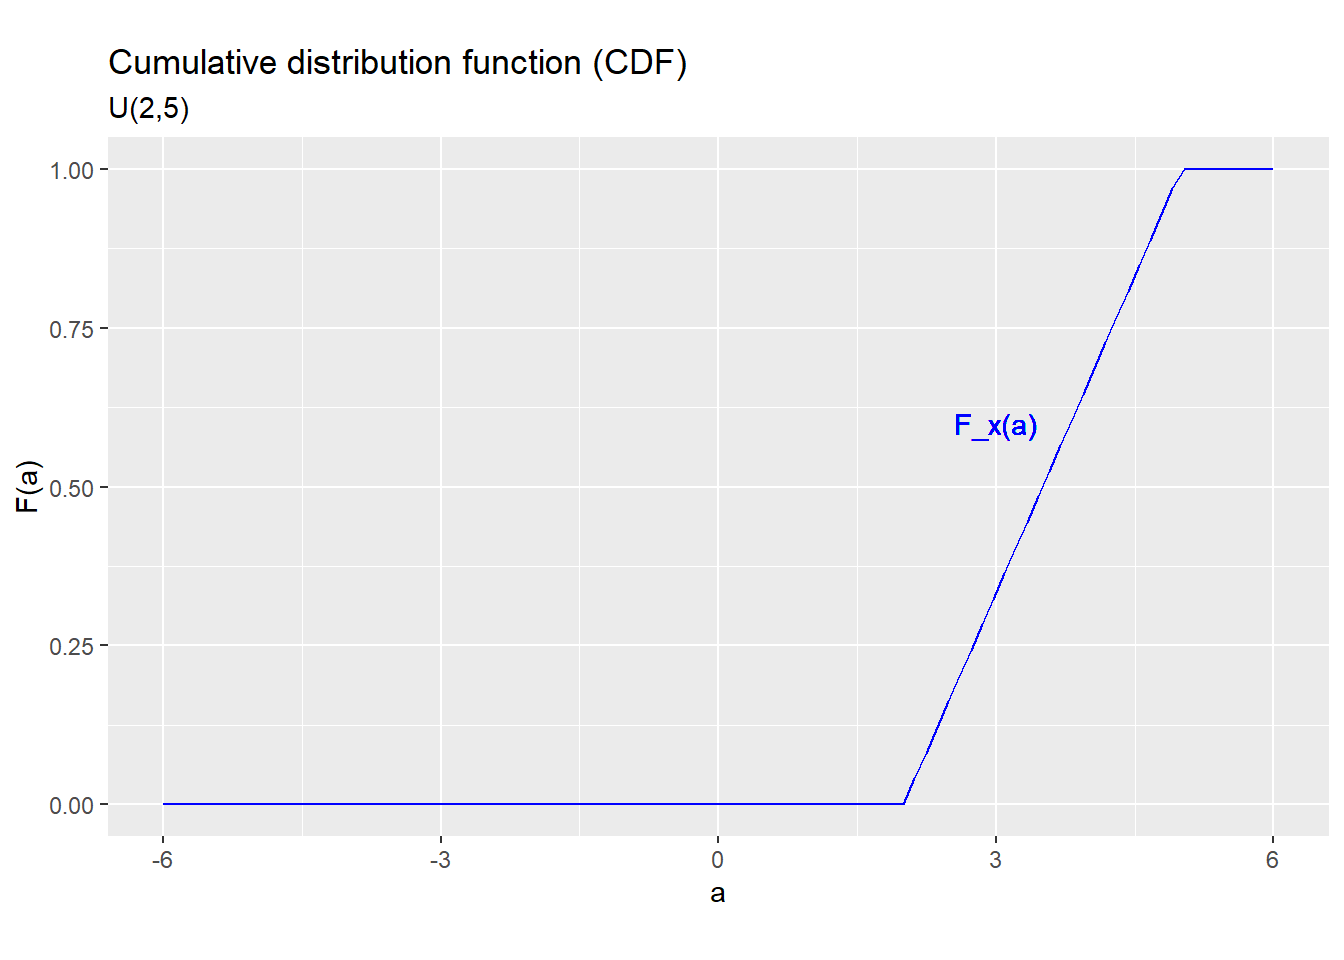 *CDF for the U(2,5) distribution*